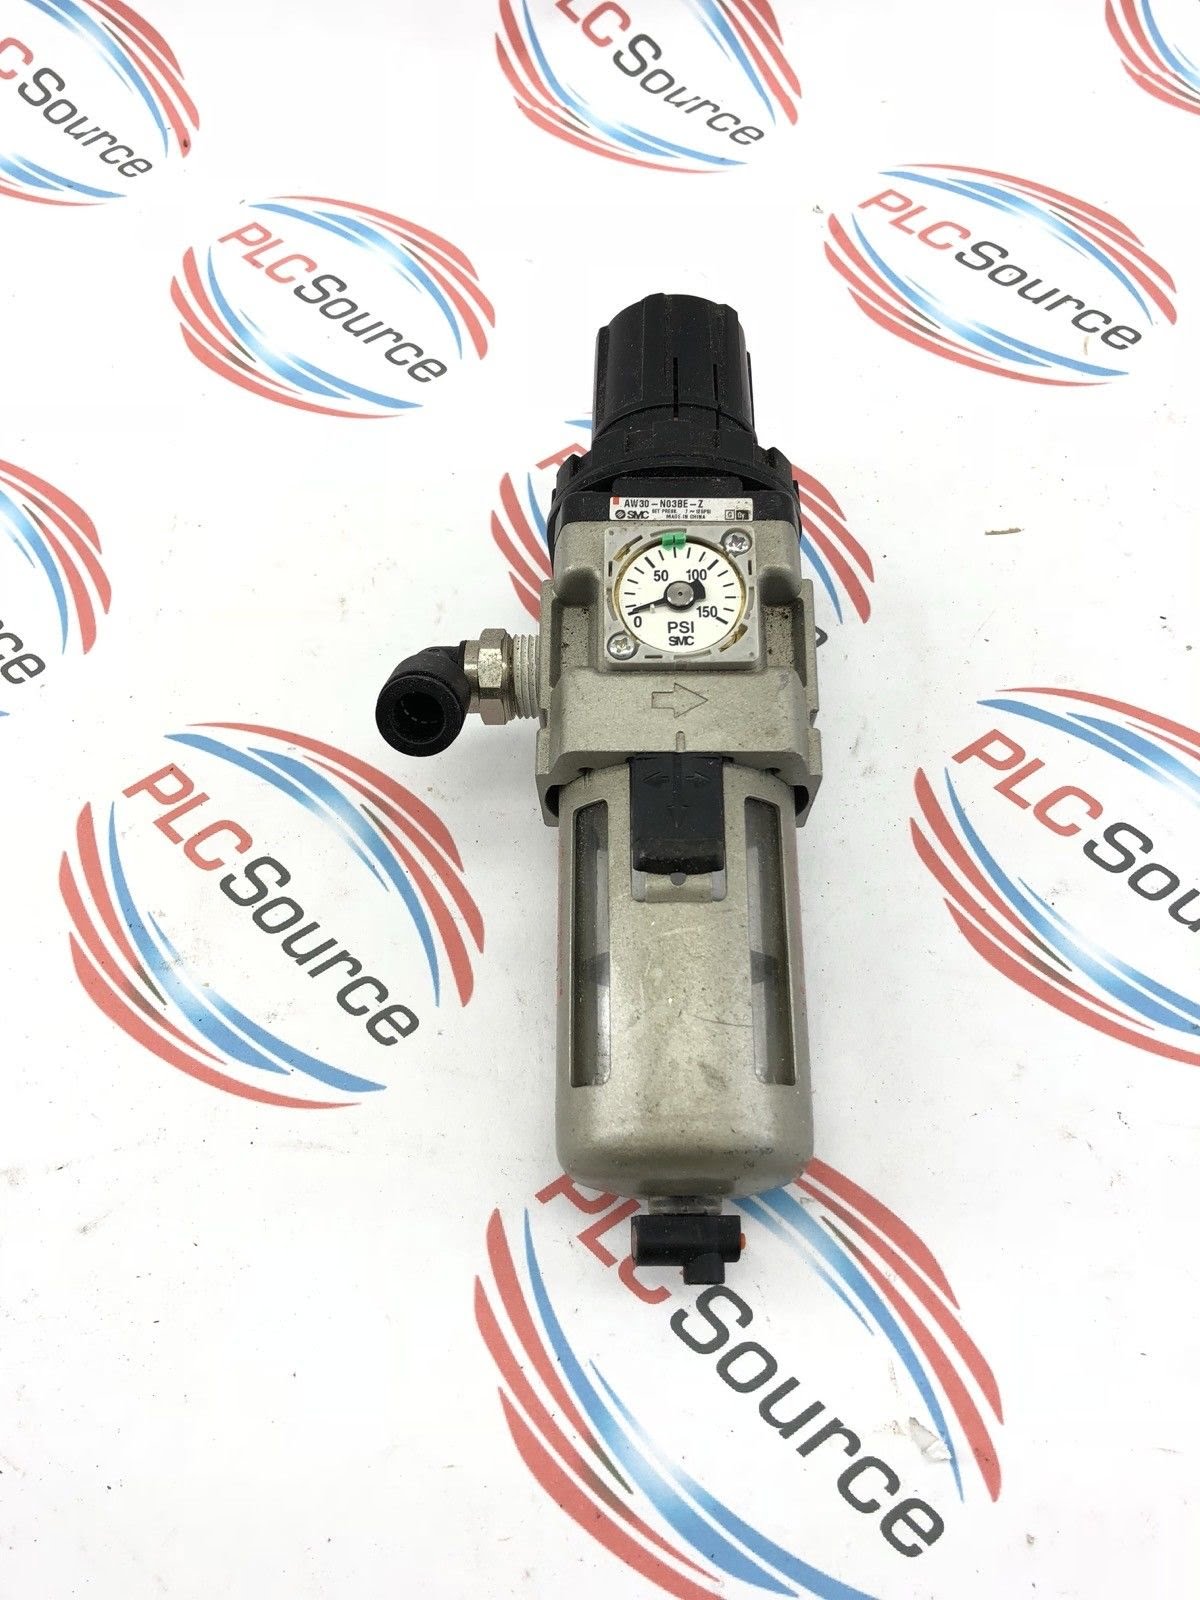 Details about   smc filter regulator with gauge 0-150 psi 